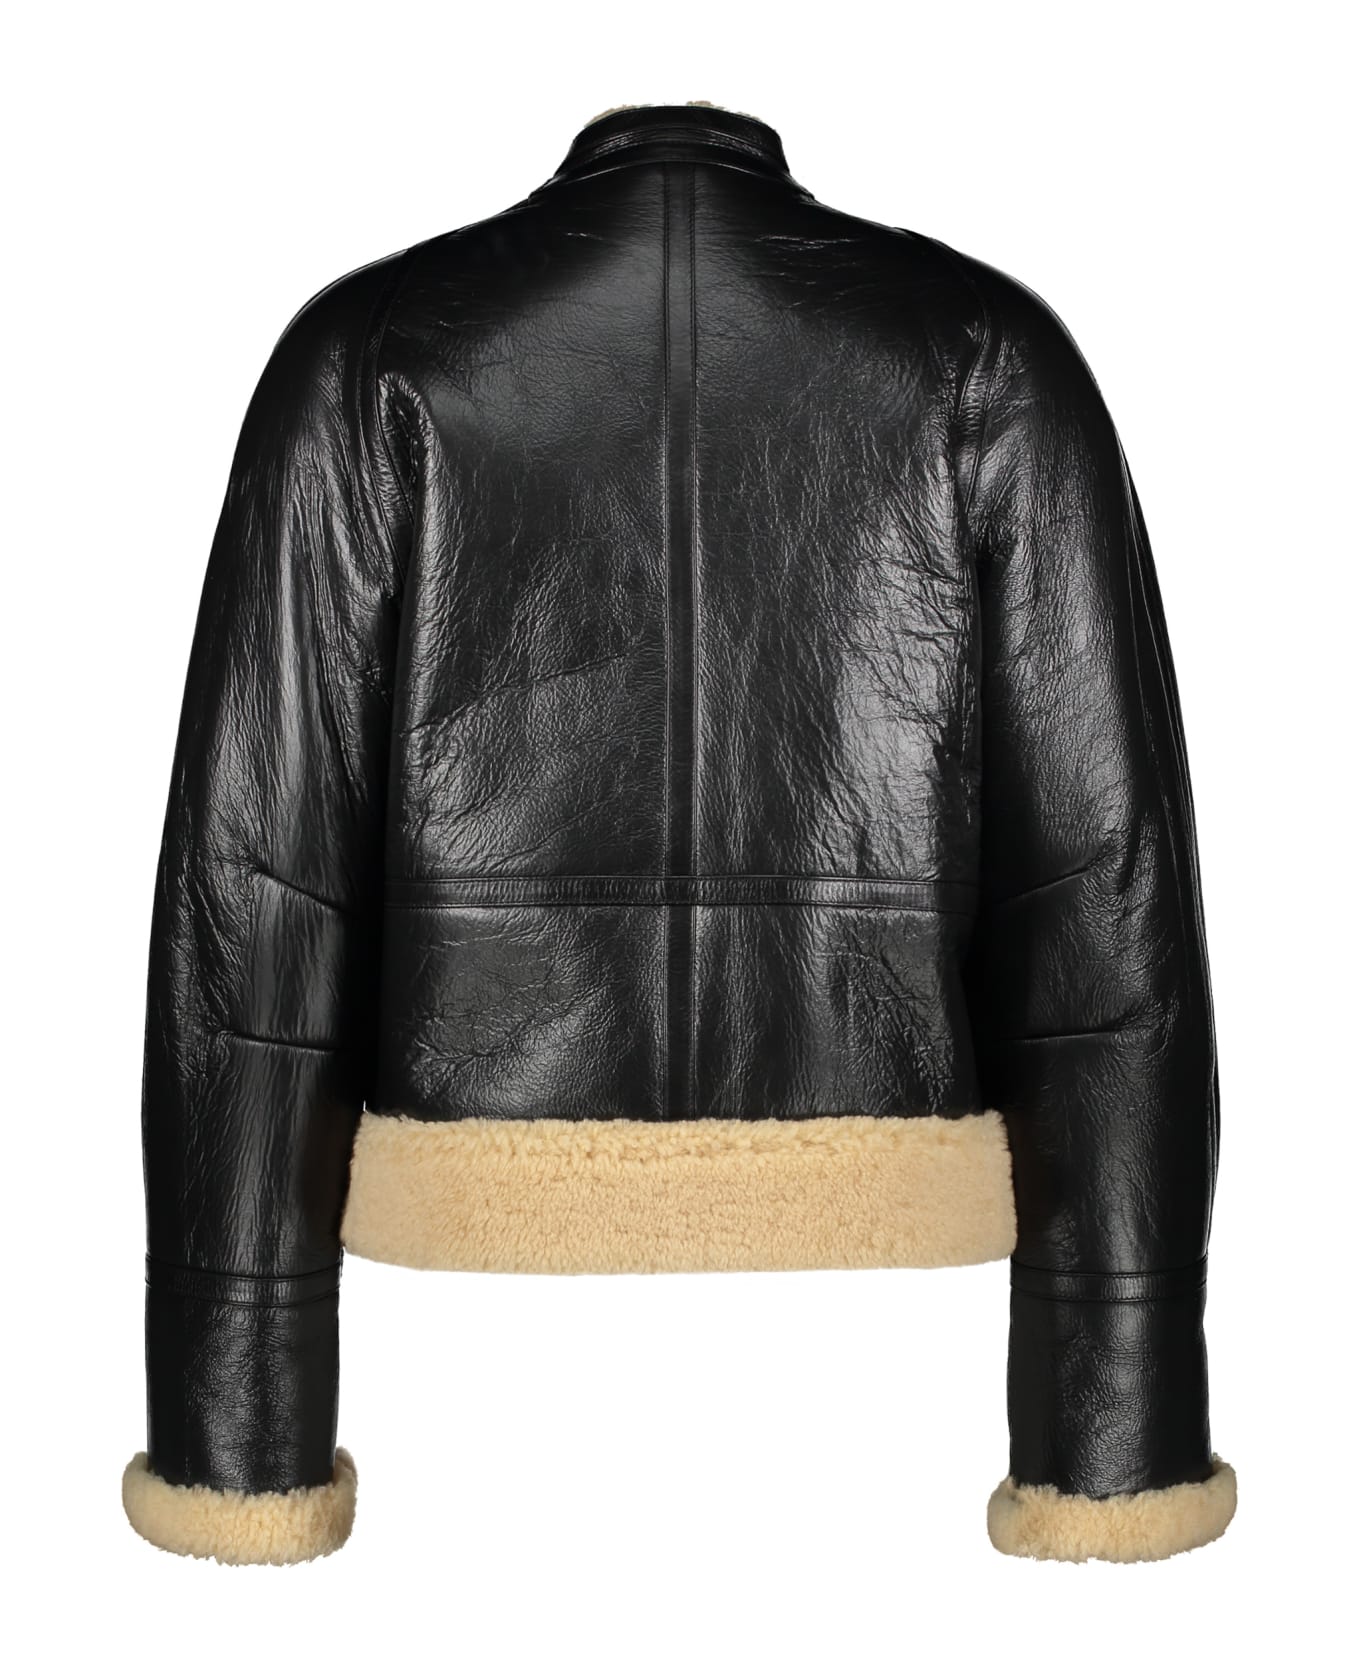 Celine Leather Jacket - black